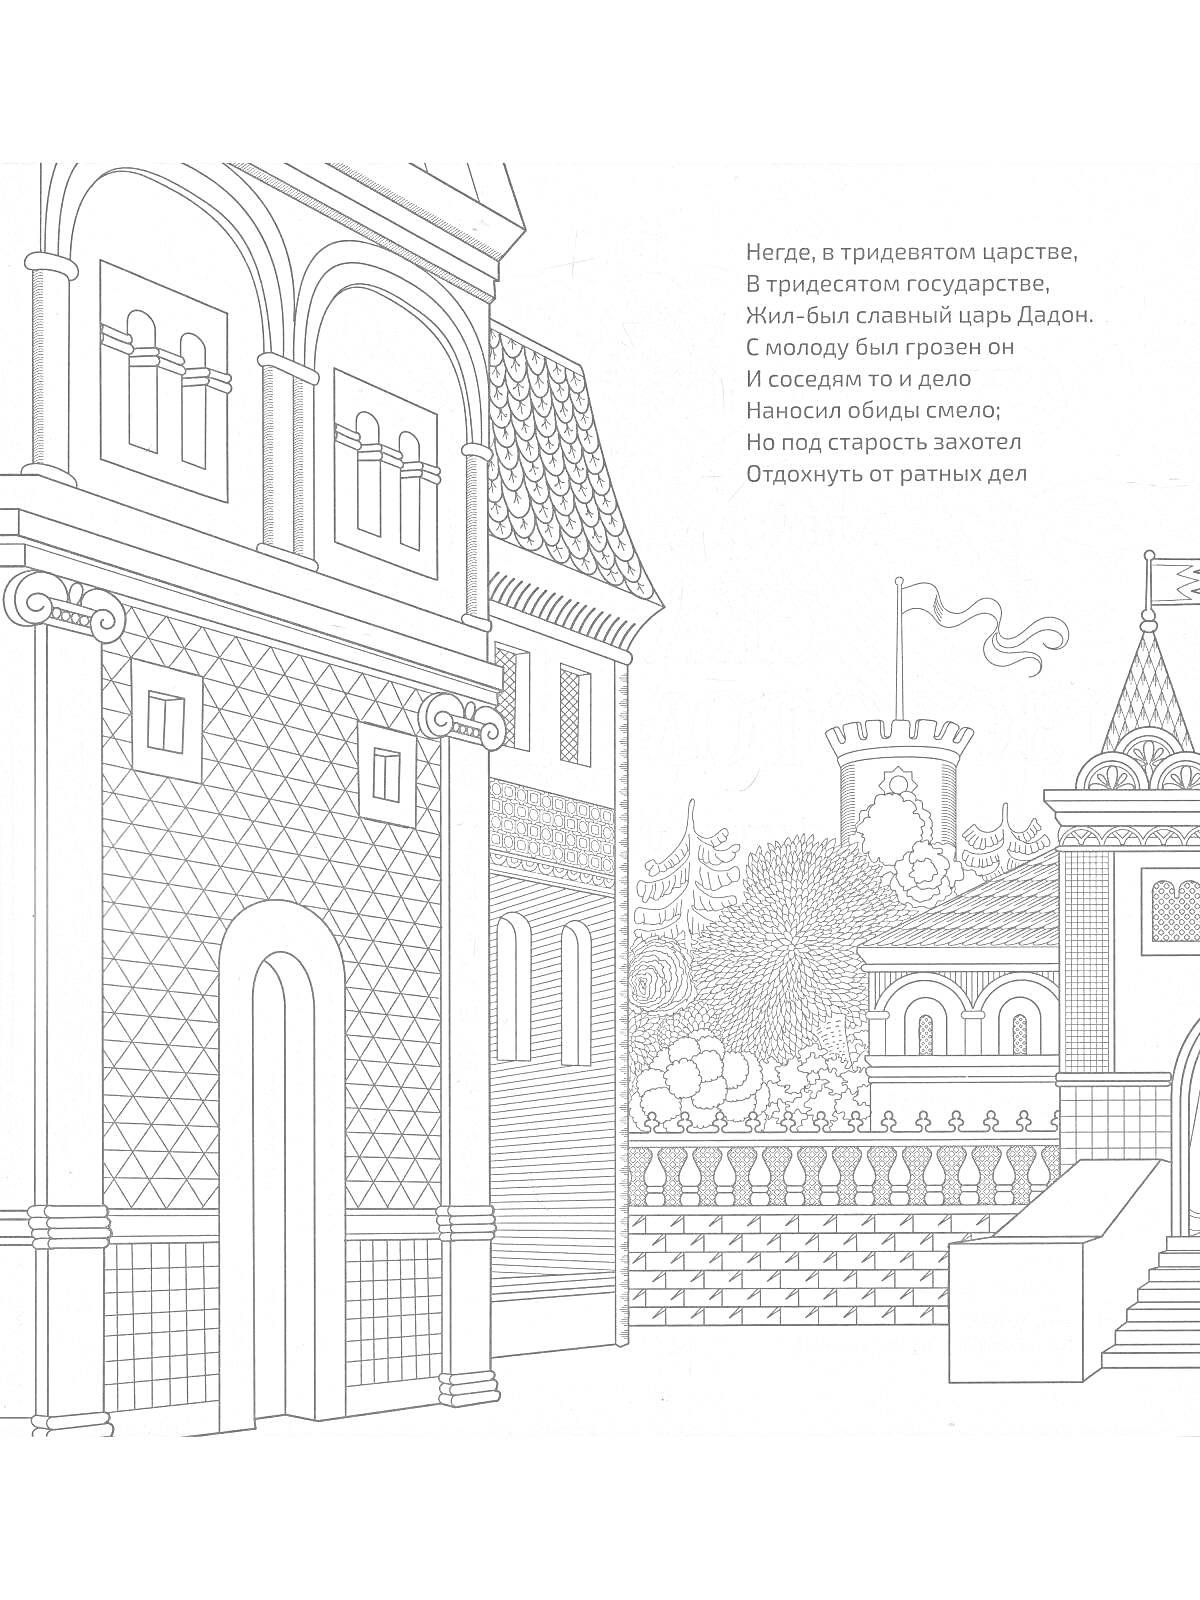 На раскраске изображено: Золотой петушок, Пушкин, Дворец, Башни, Ворота, Лестница, Архитектура, Иллюстрация